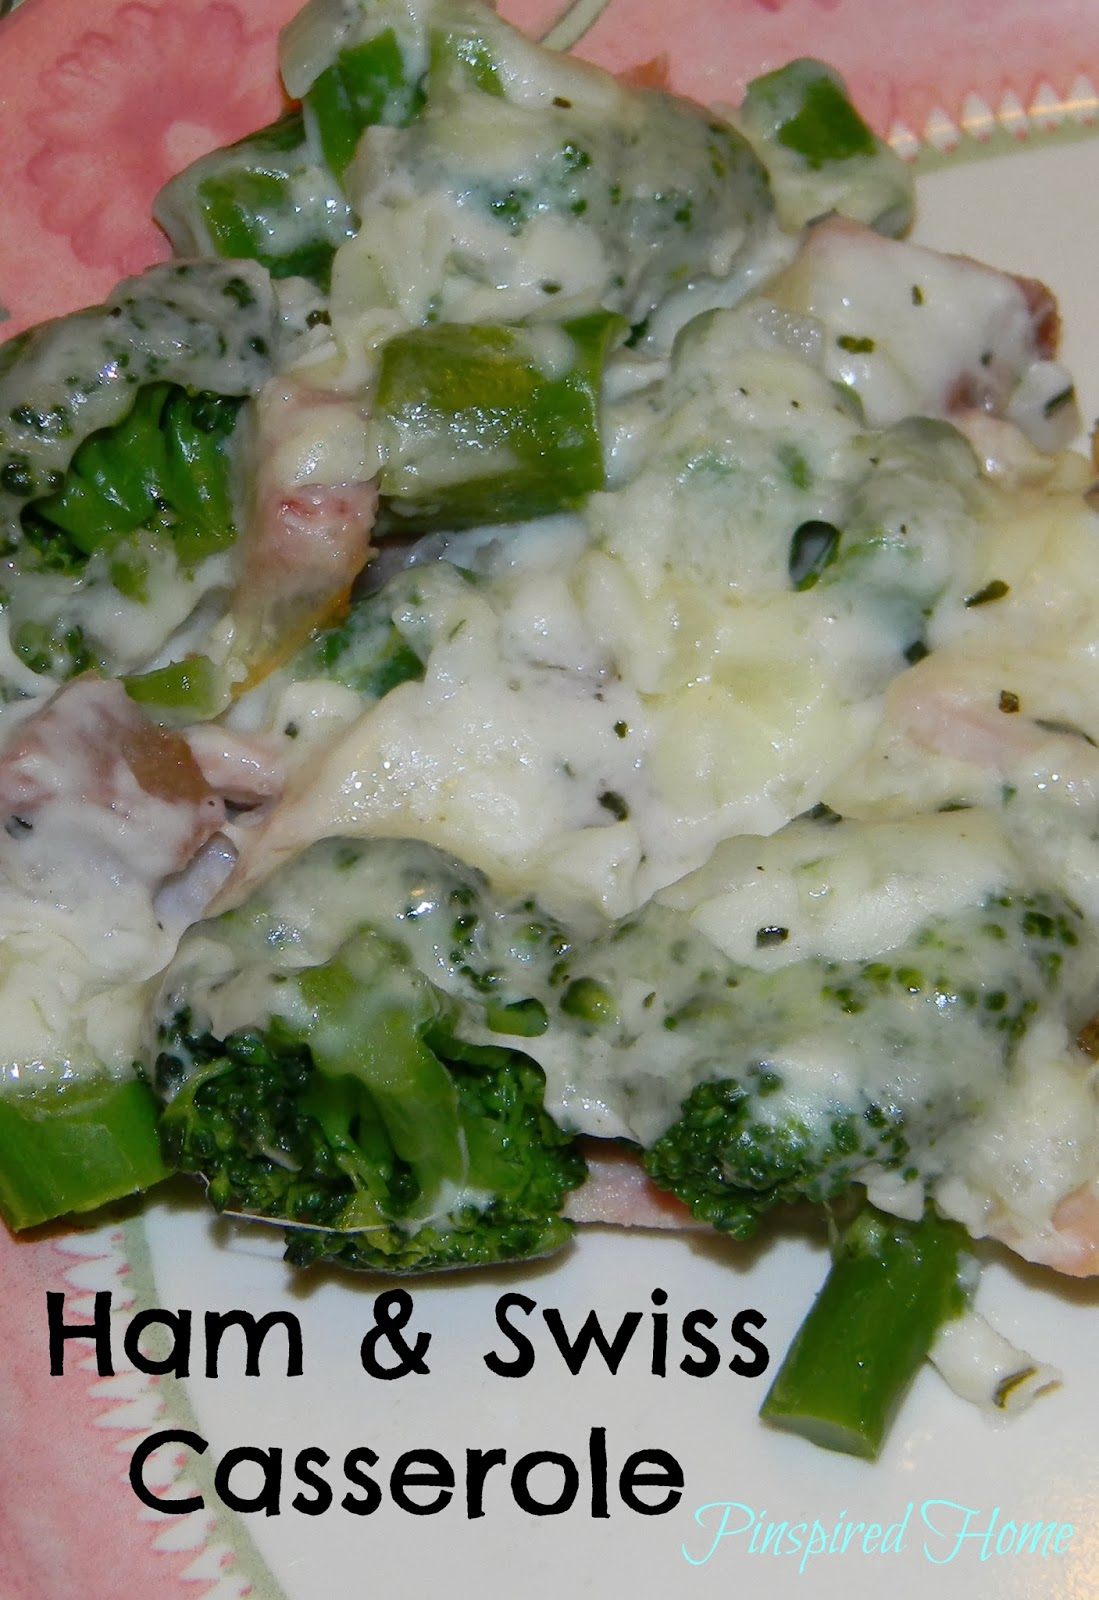 Pinspired Home: Ham & Swiss Casserole